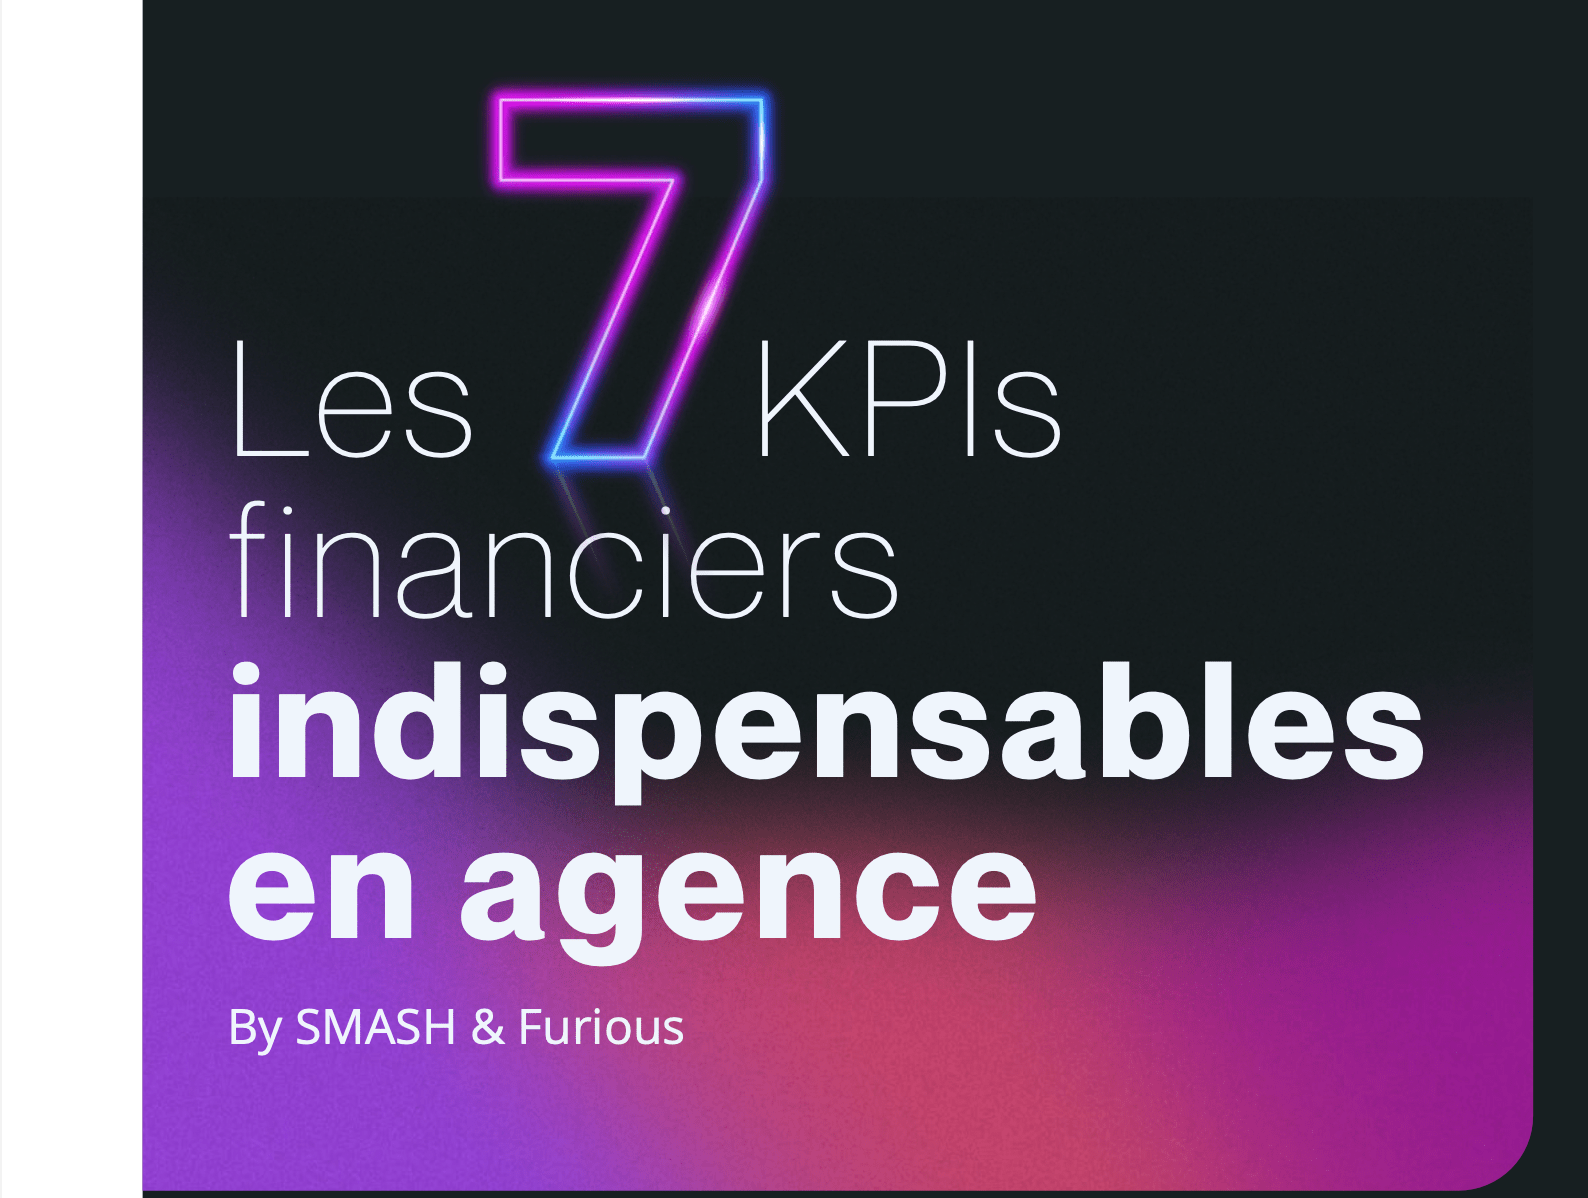 Les 7 KPI's financiers indispensables en agence